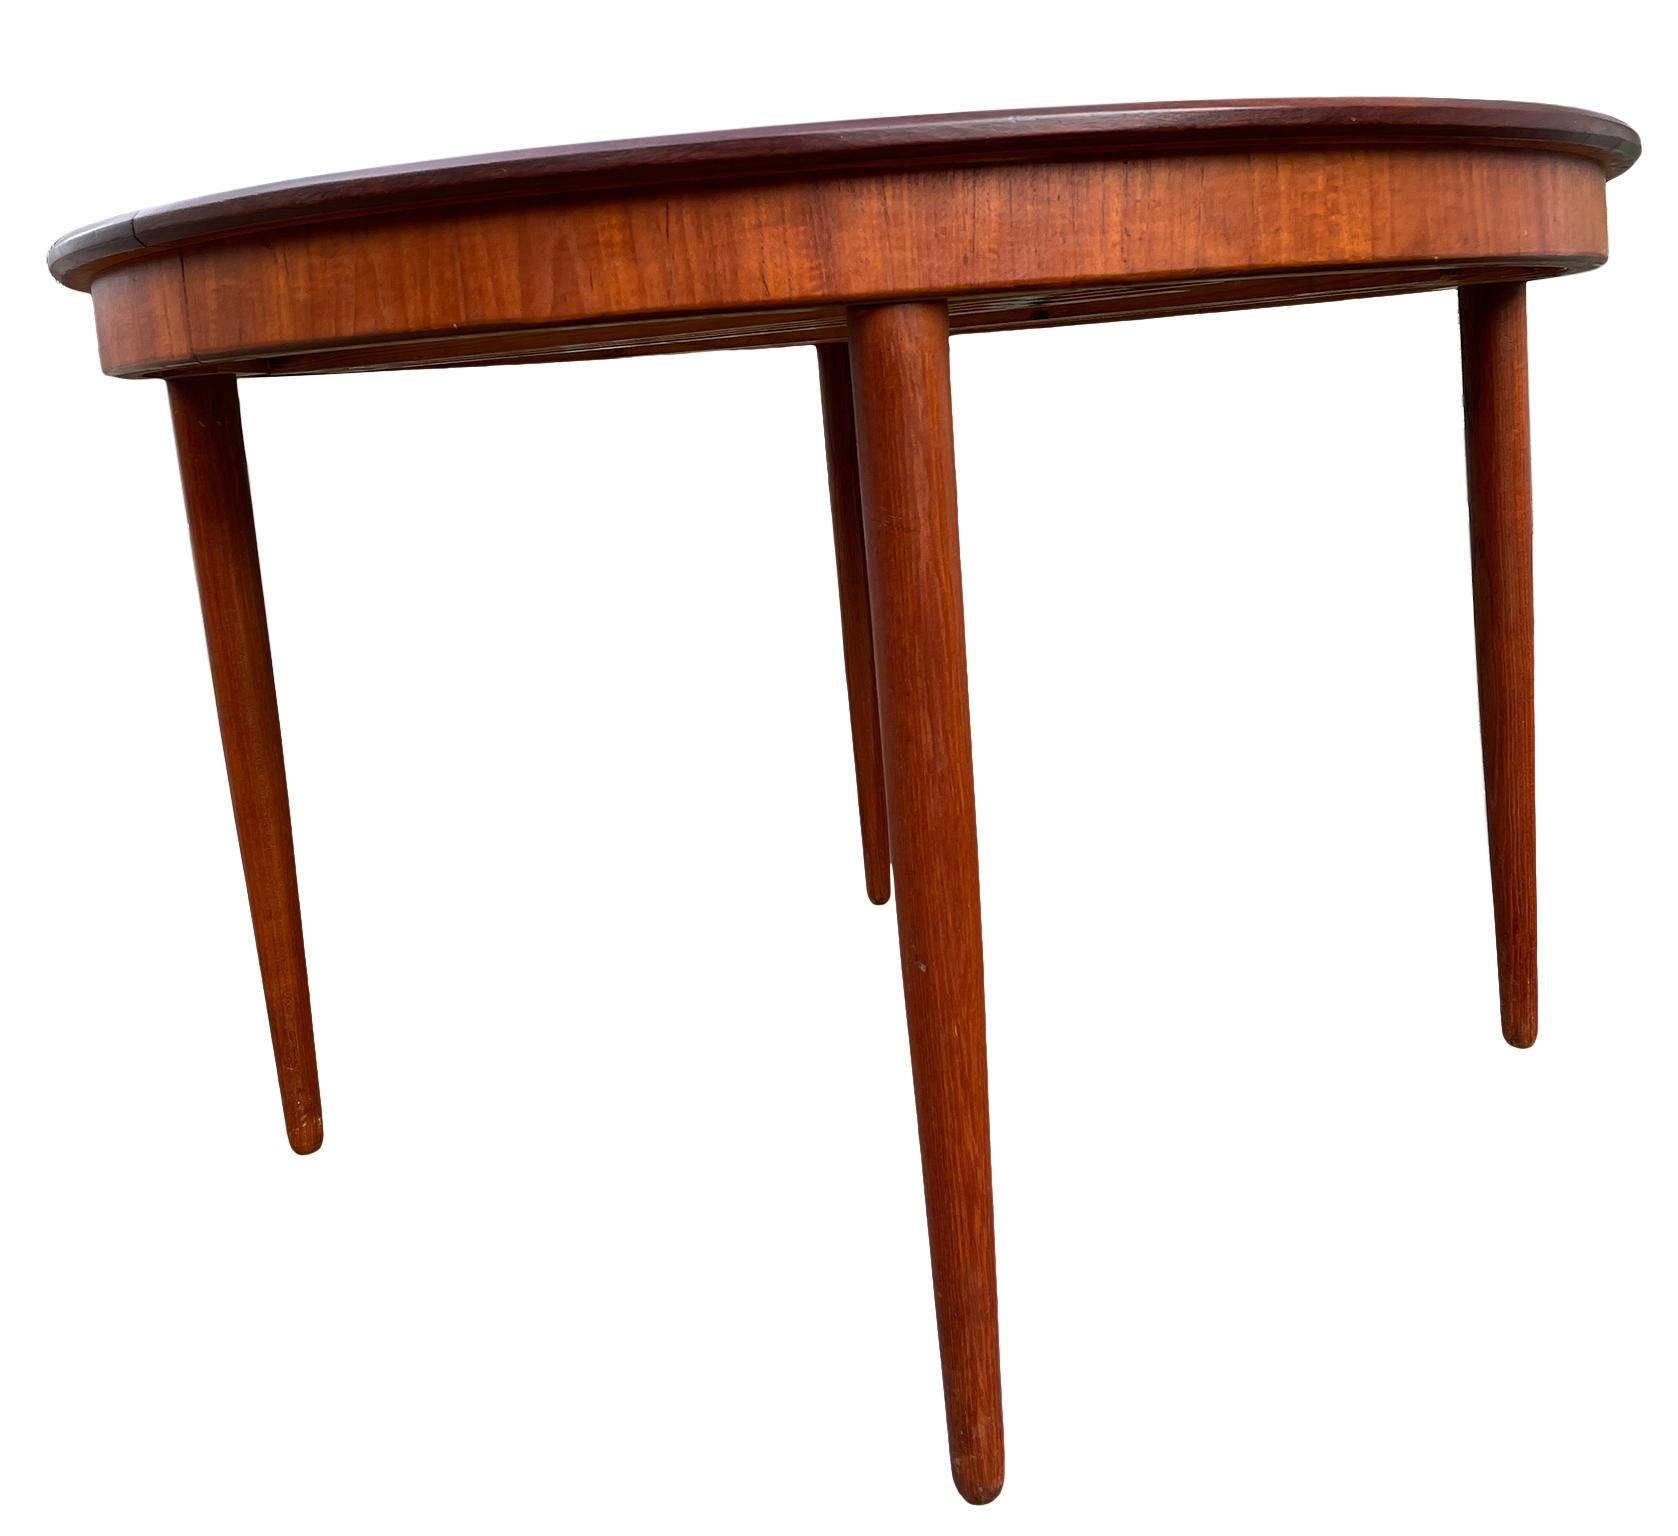 Woodwork Midcentury Round Teak Danish Modern Extension Dining Table 3 Leaves